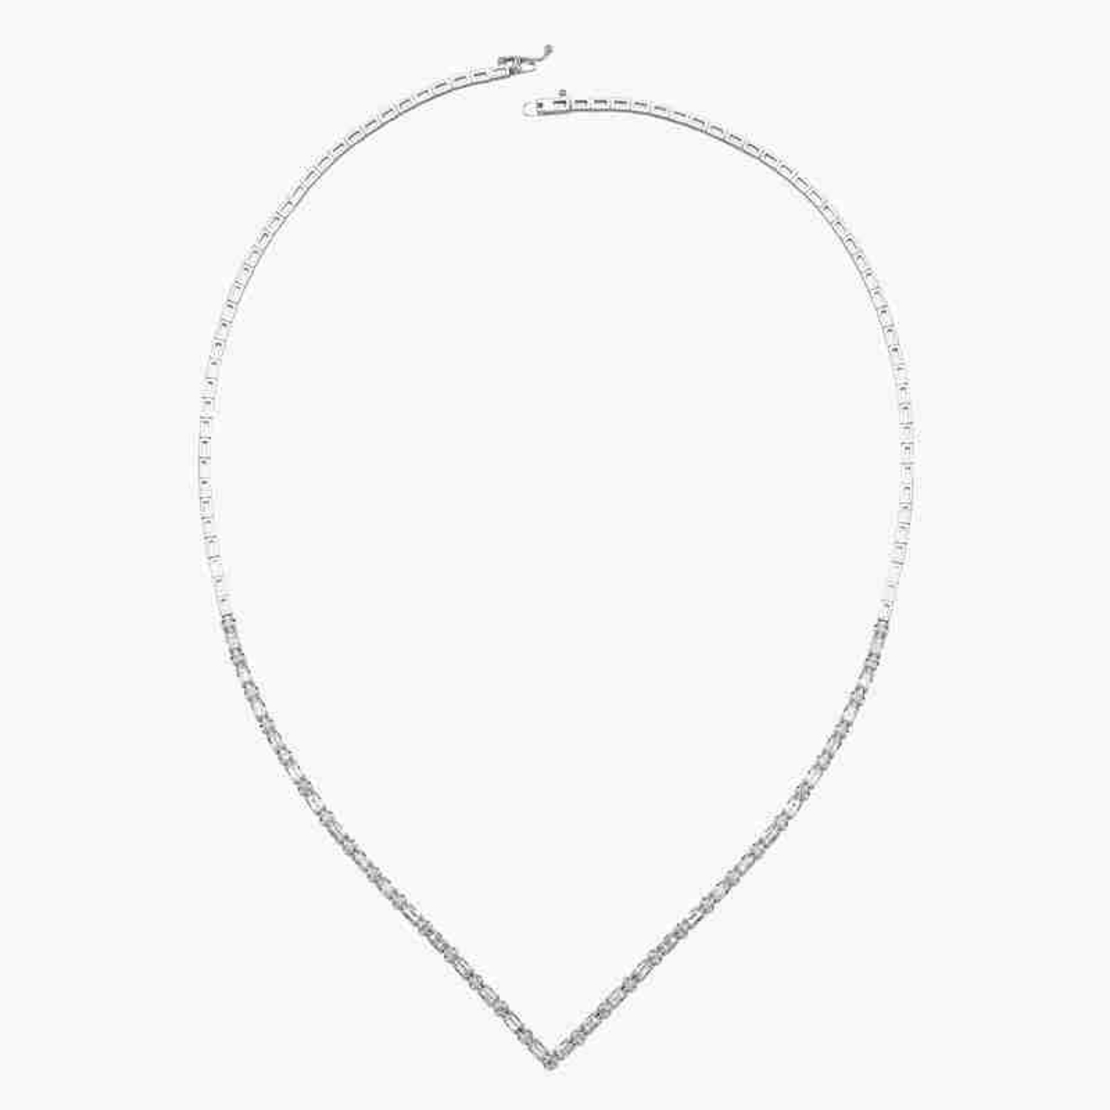 1.56 ct Diamond necklace